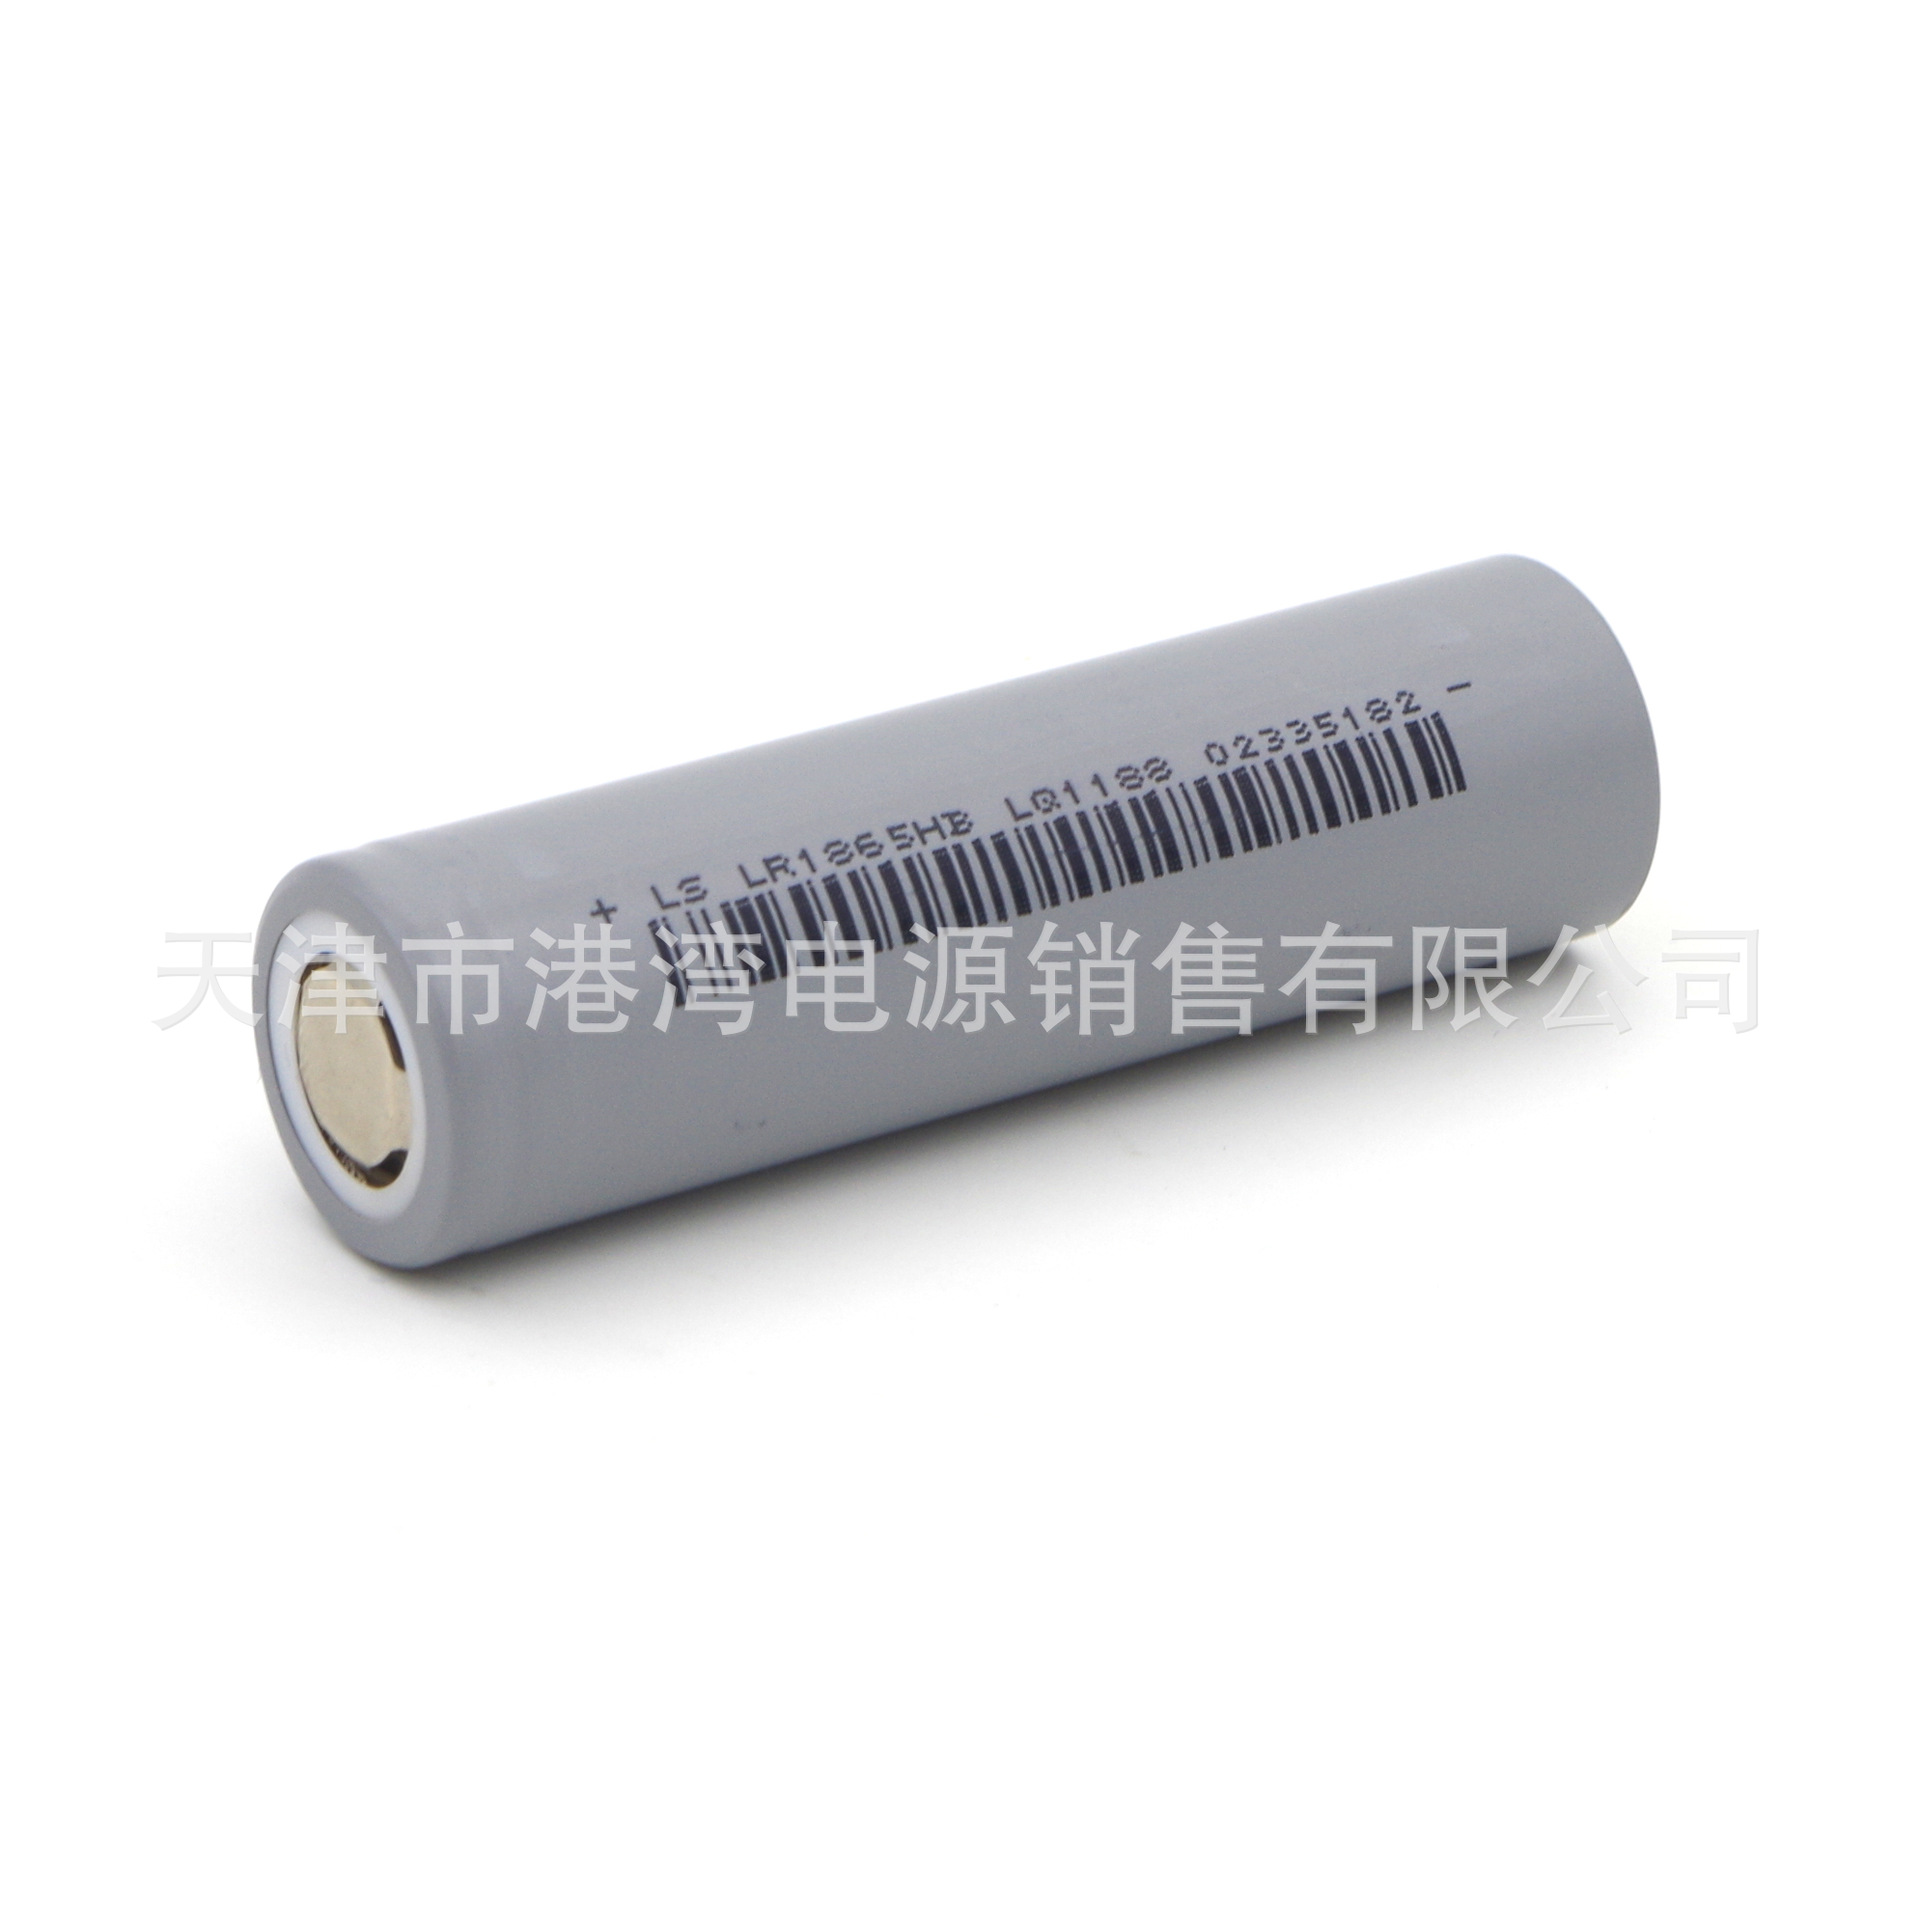 Batterie Li-ion rechargeable 18650 3,7V 3250mAh